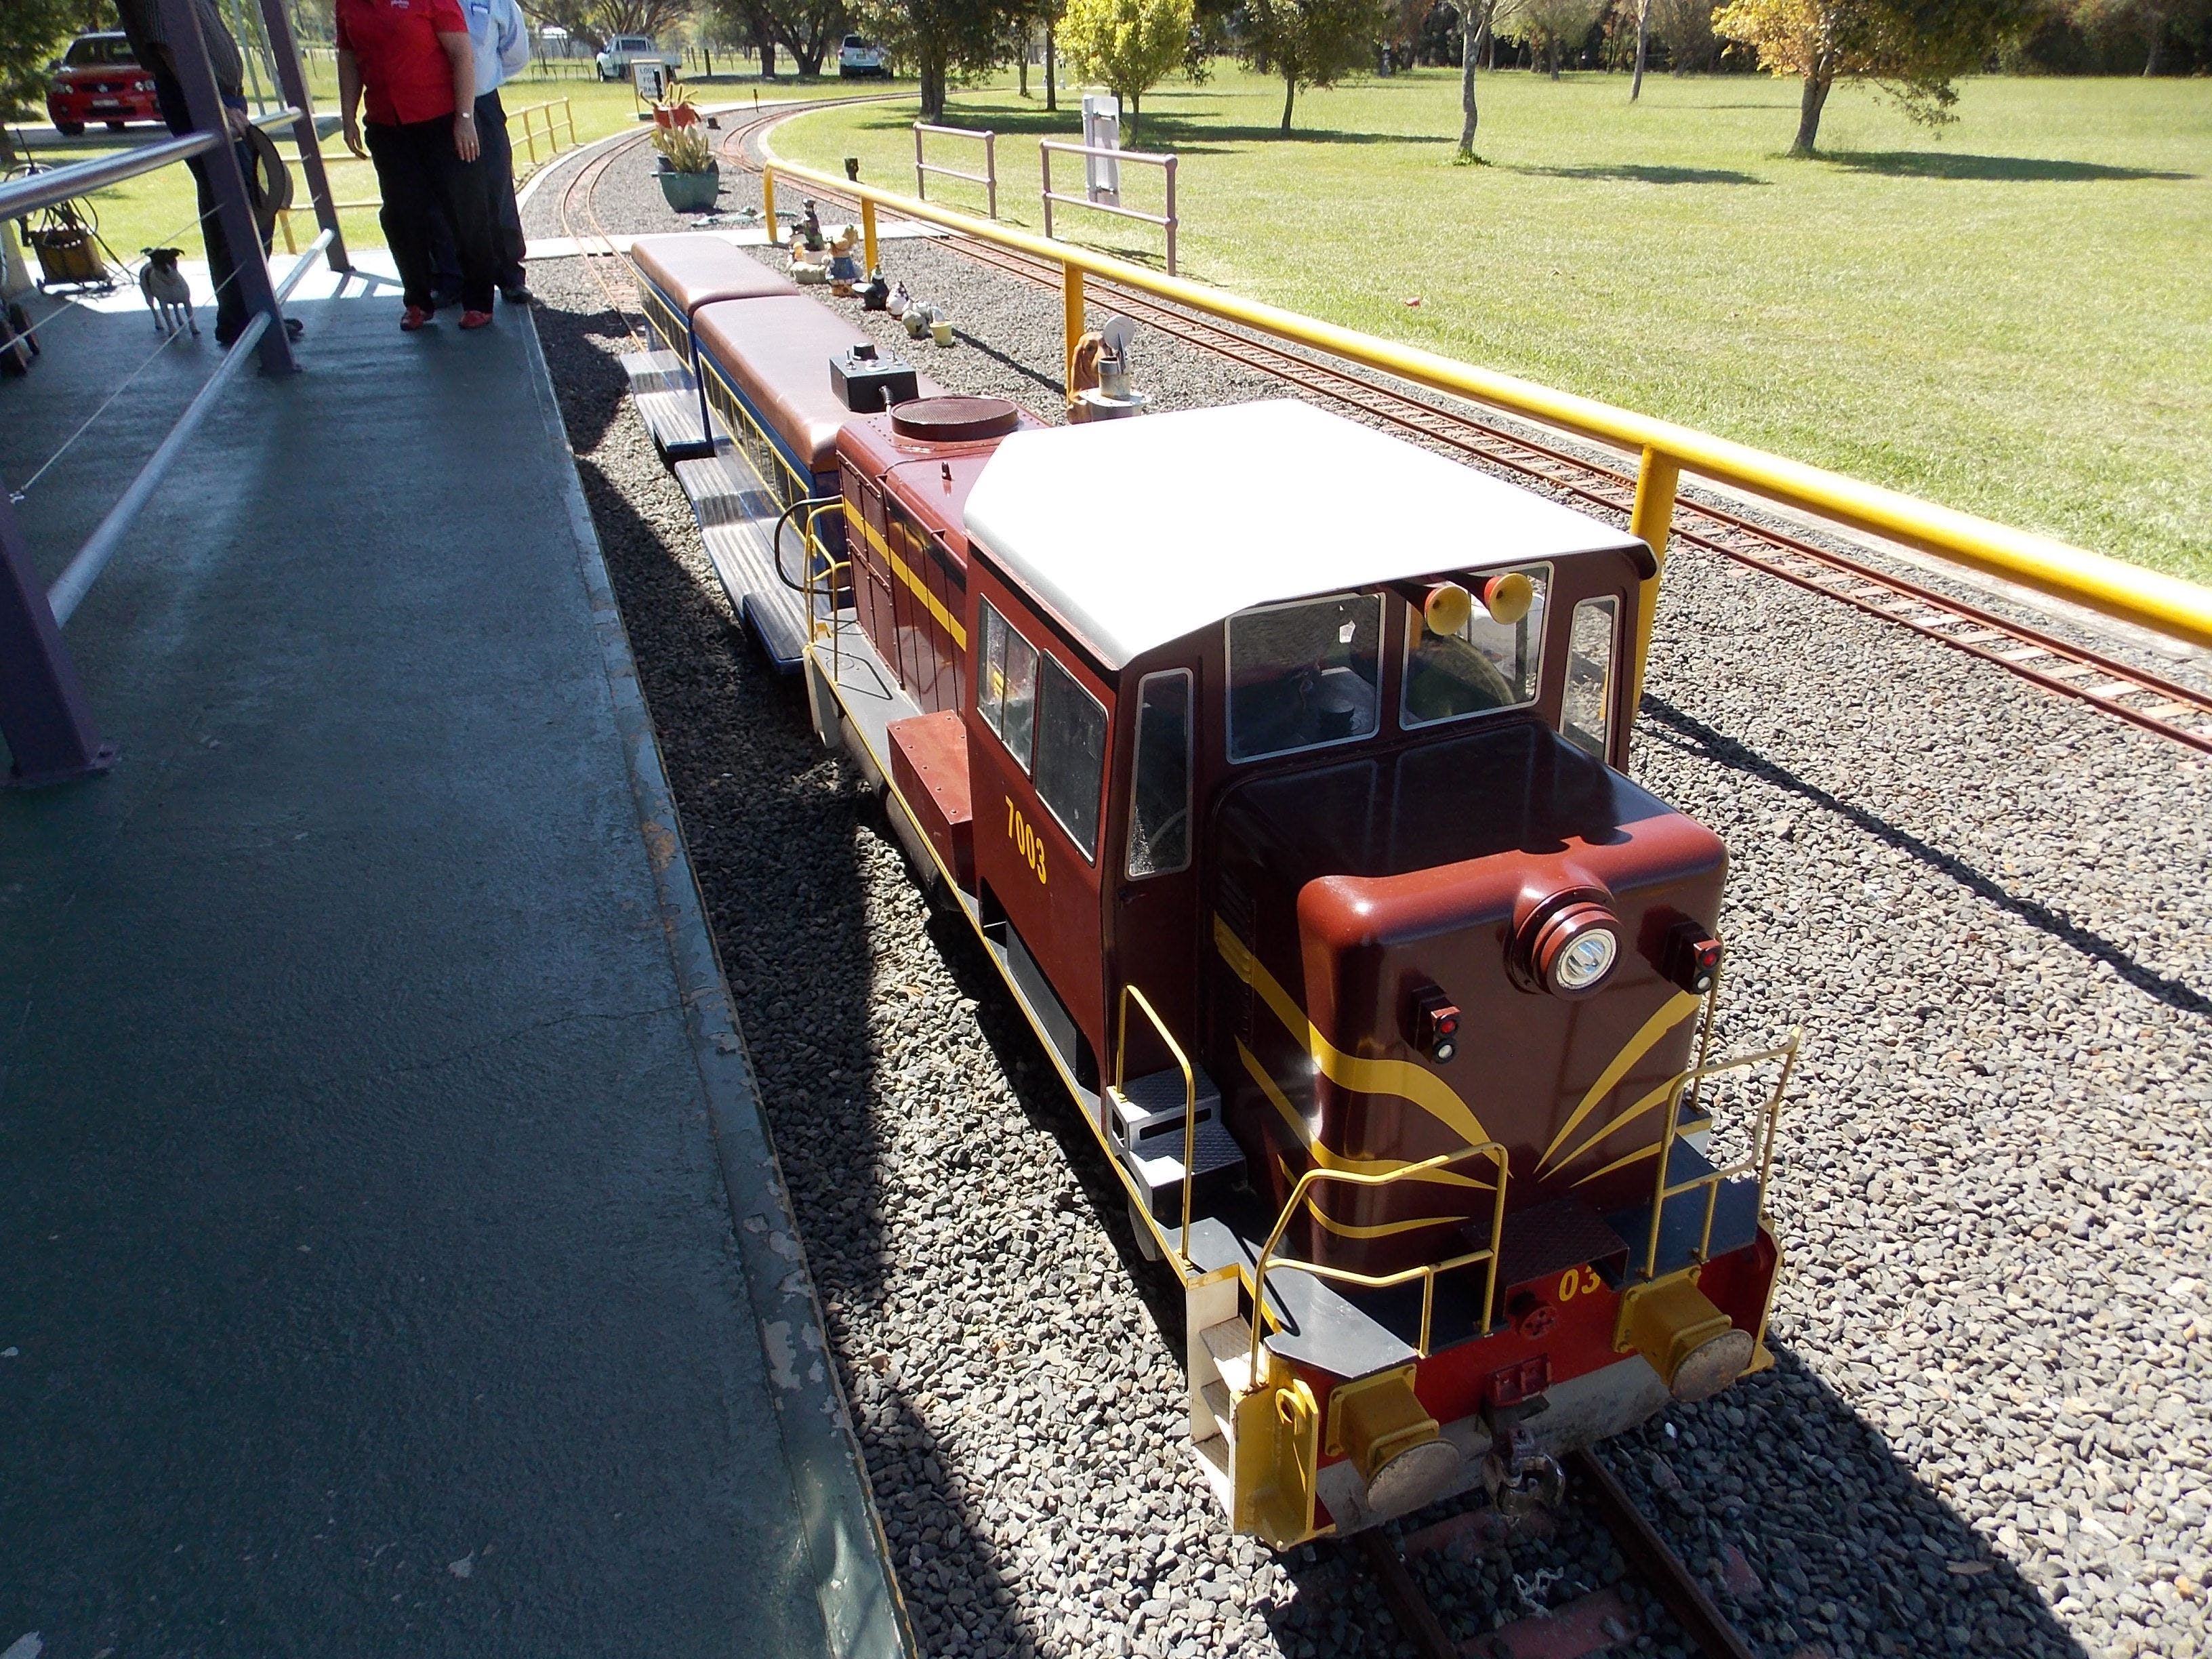 Penwood Miniature Railway - St Kilda Accommodation